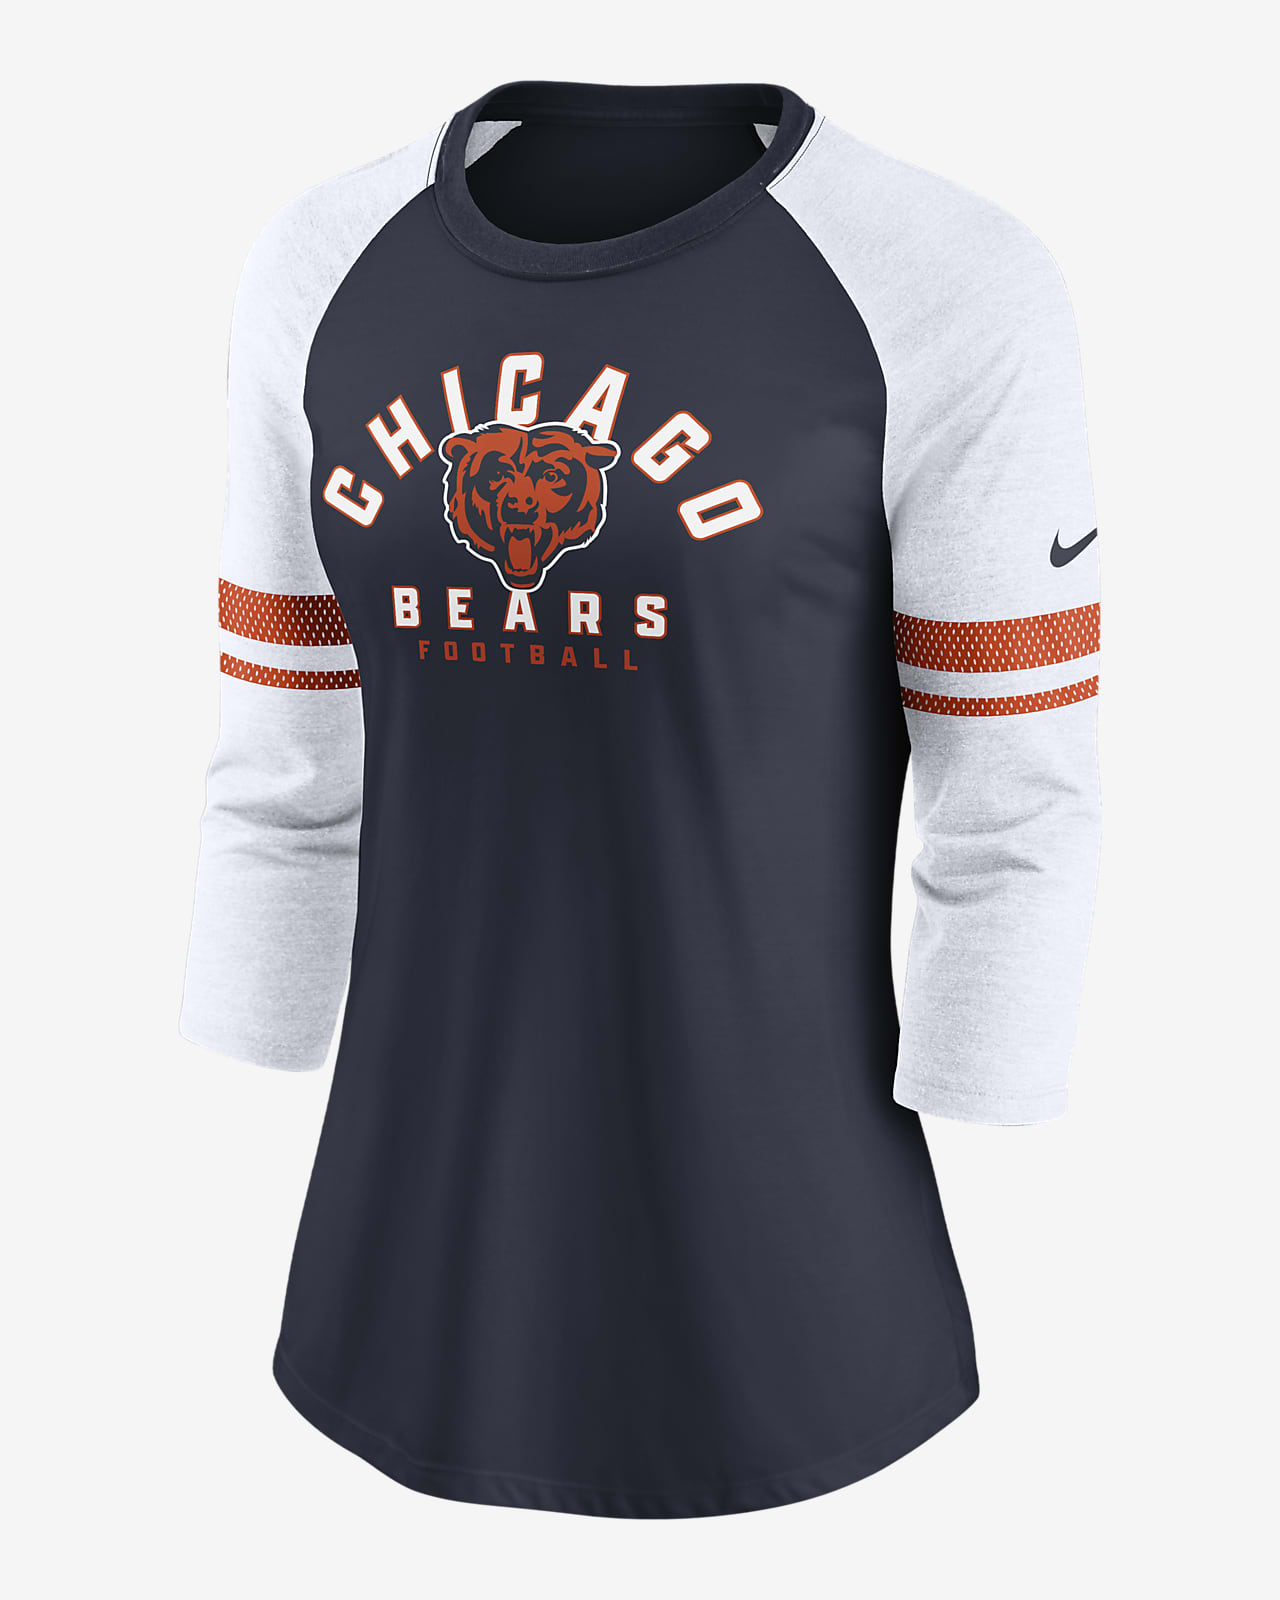 chicago bears t shirt women's